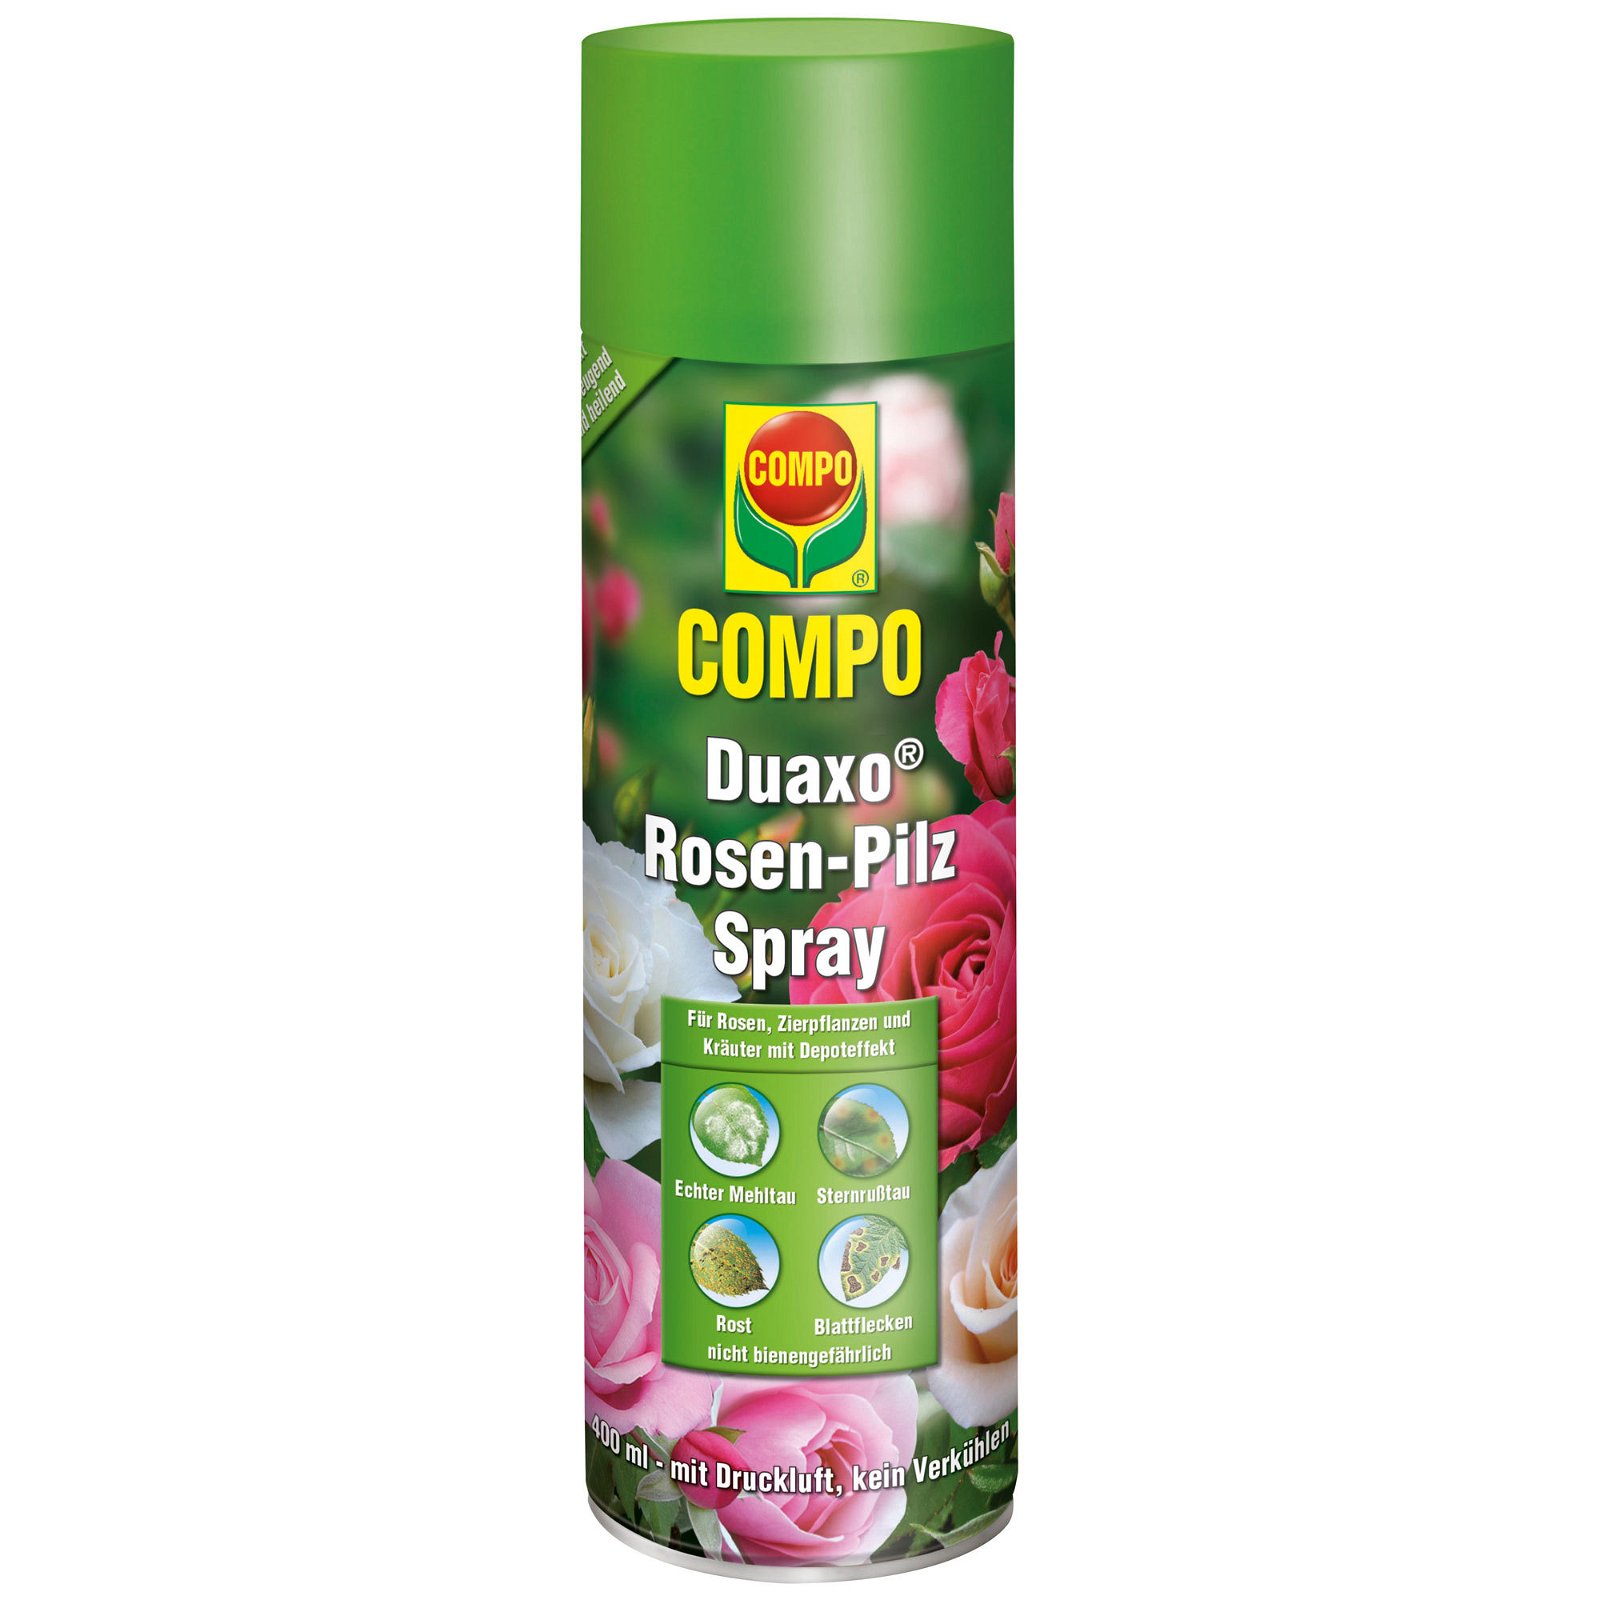 Compo Duaxo Rosen-Pilz Spray, 400 ml